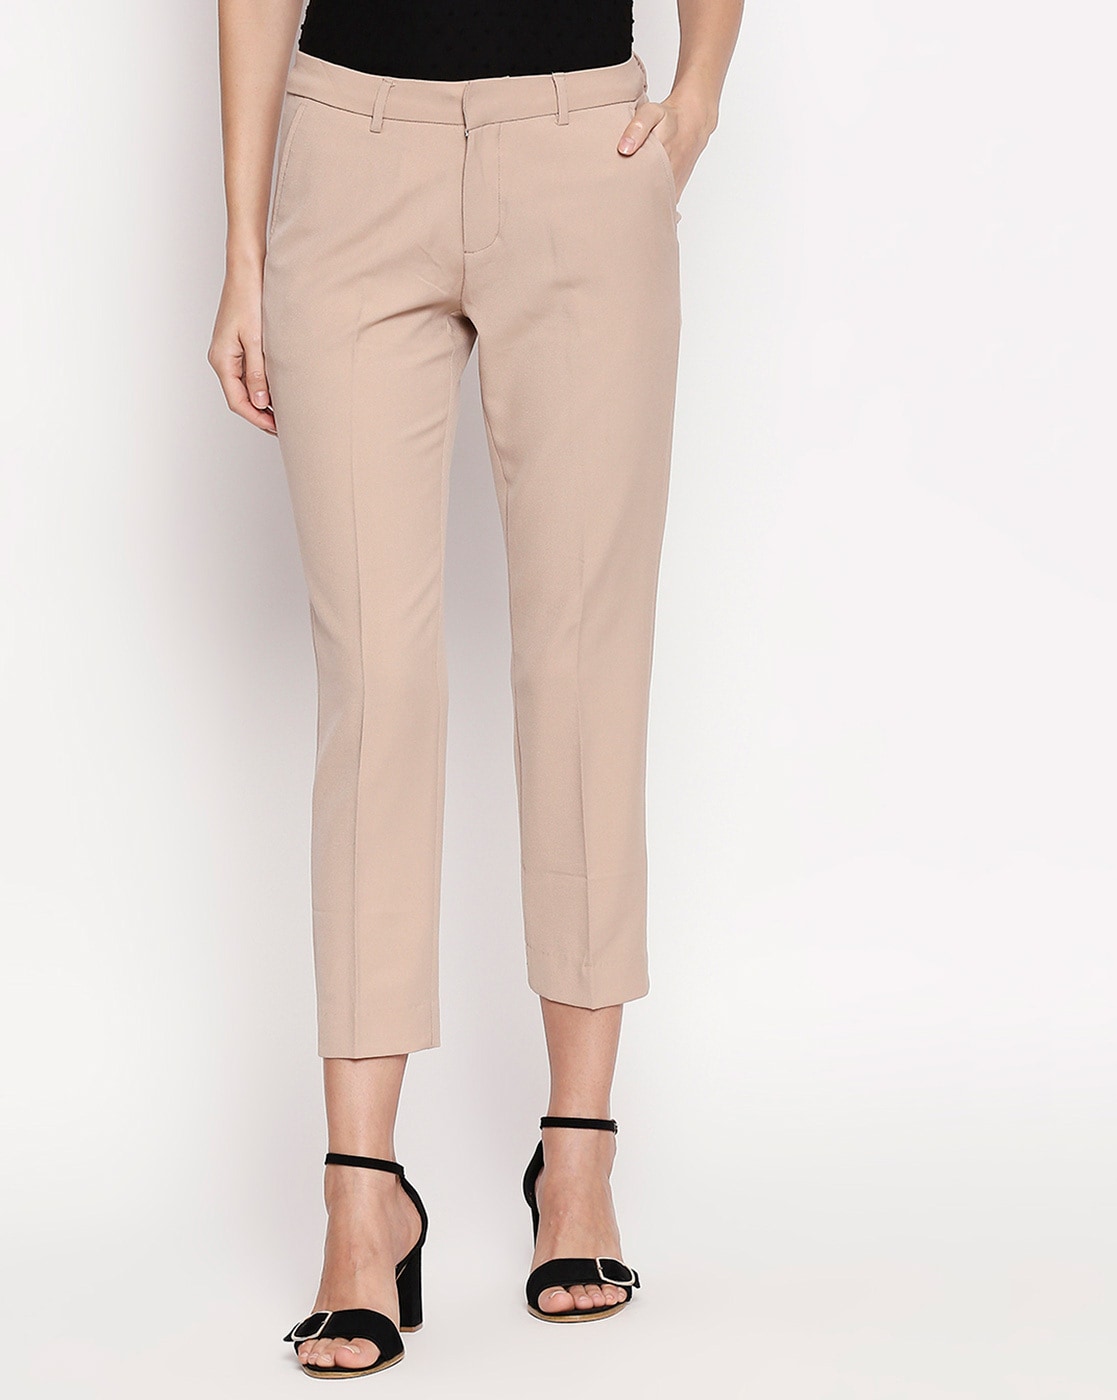 Buy Beige Trousers  Pants for Women by Annabelle by Pantaloons Online   Ajiocom